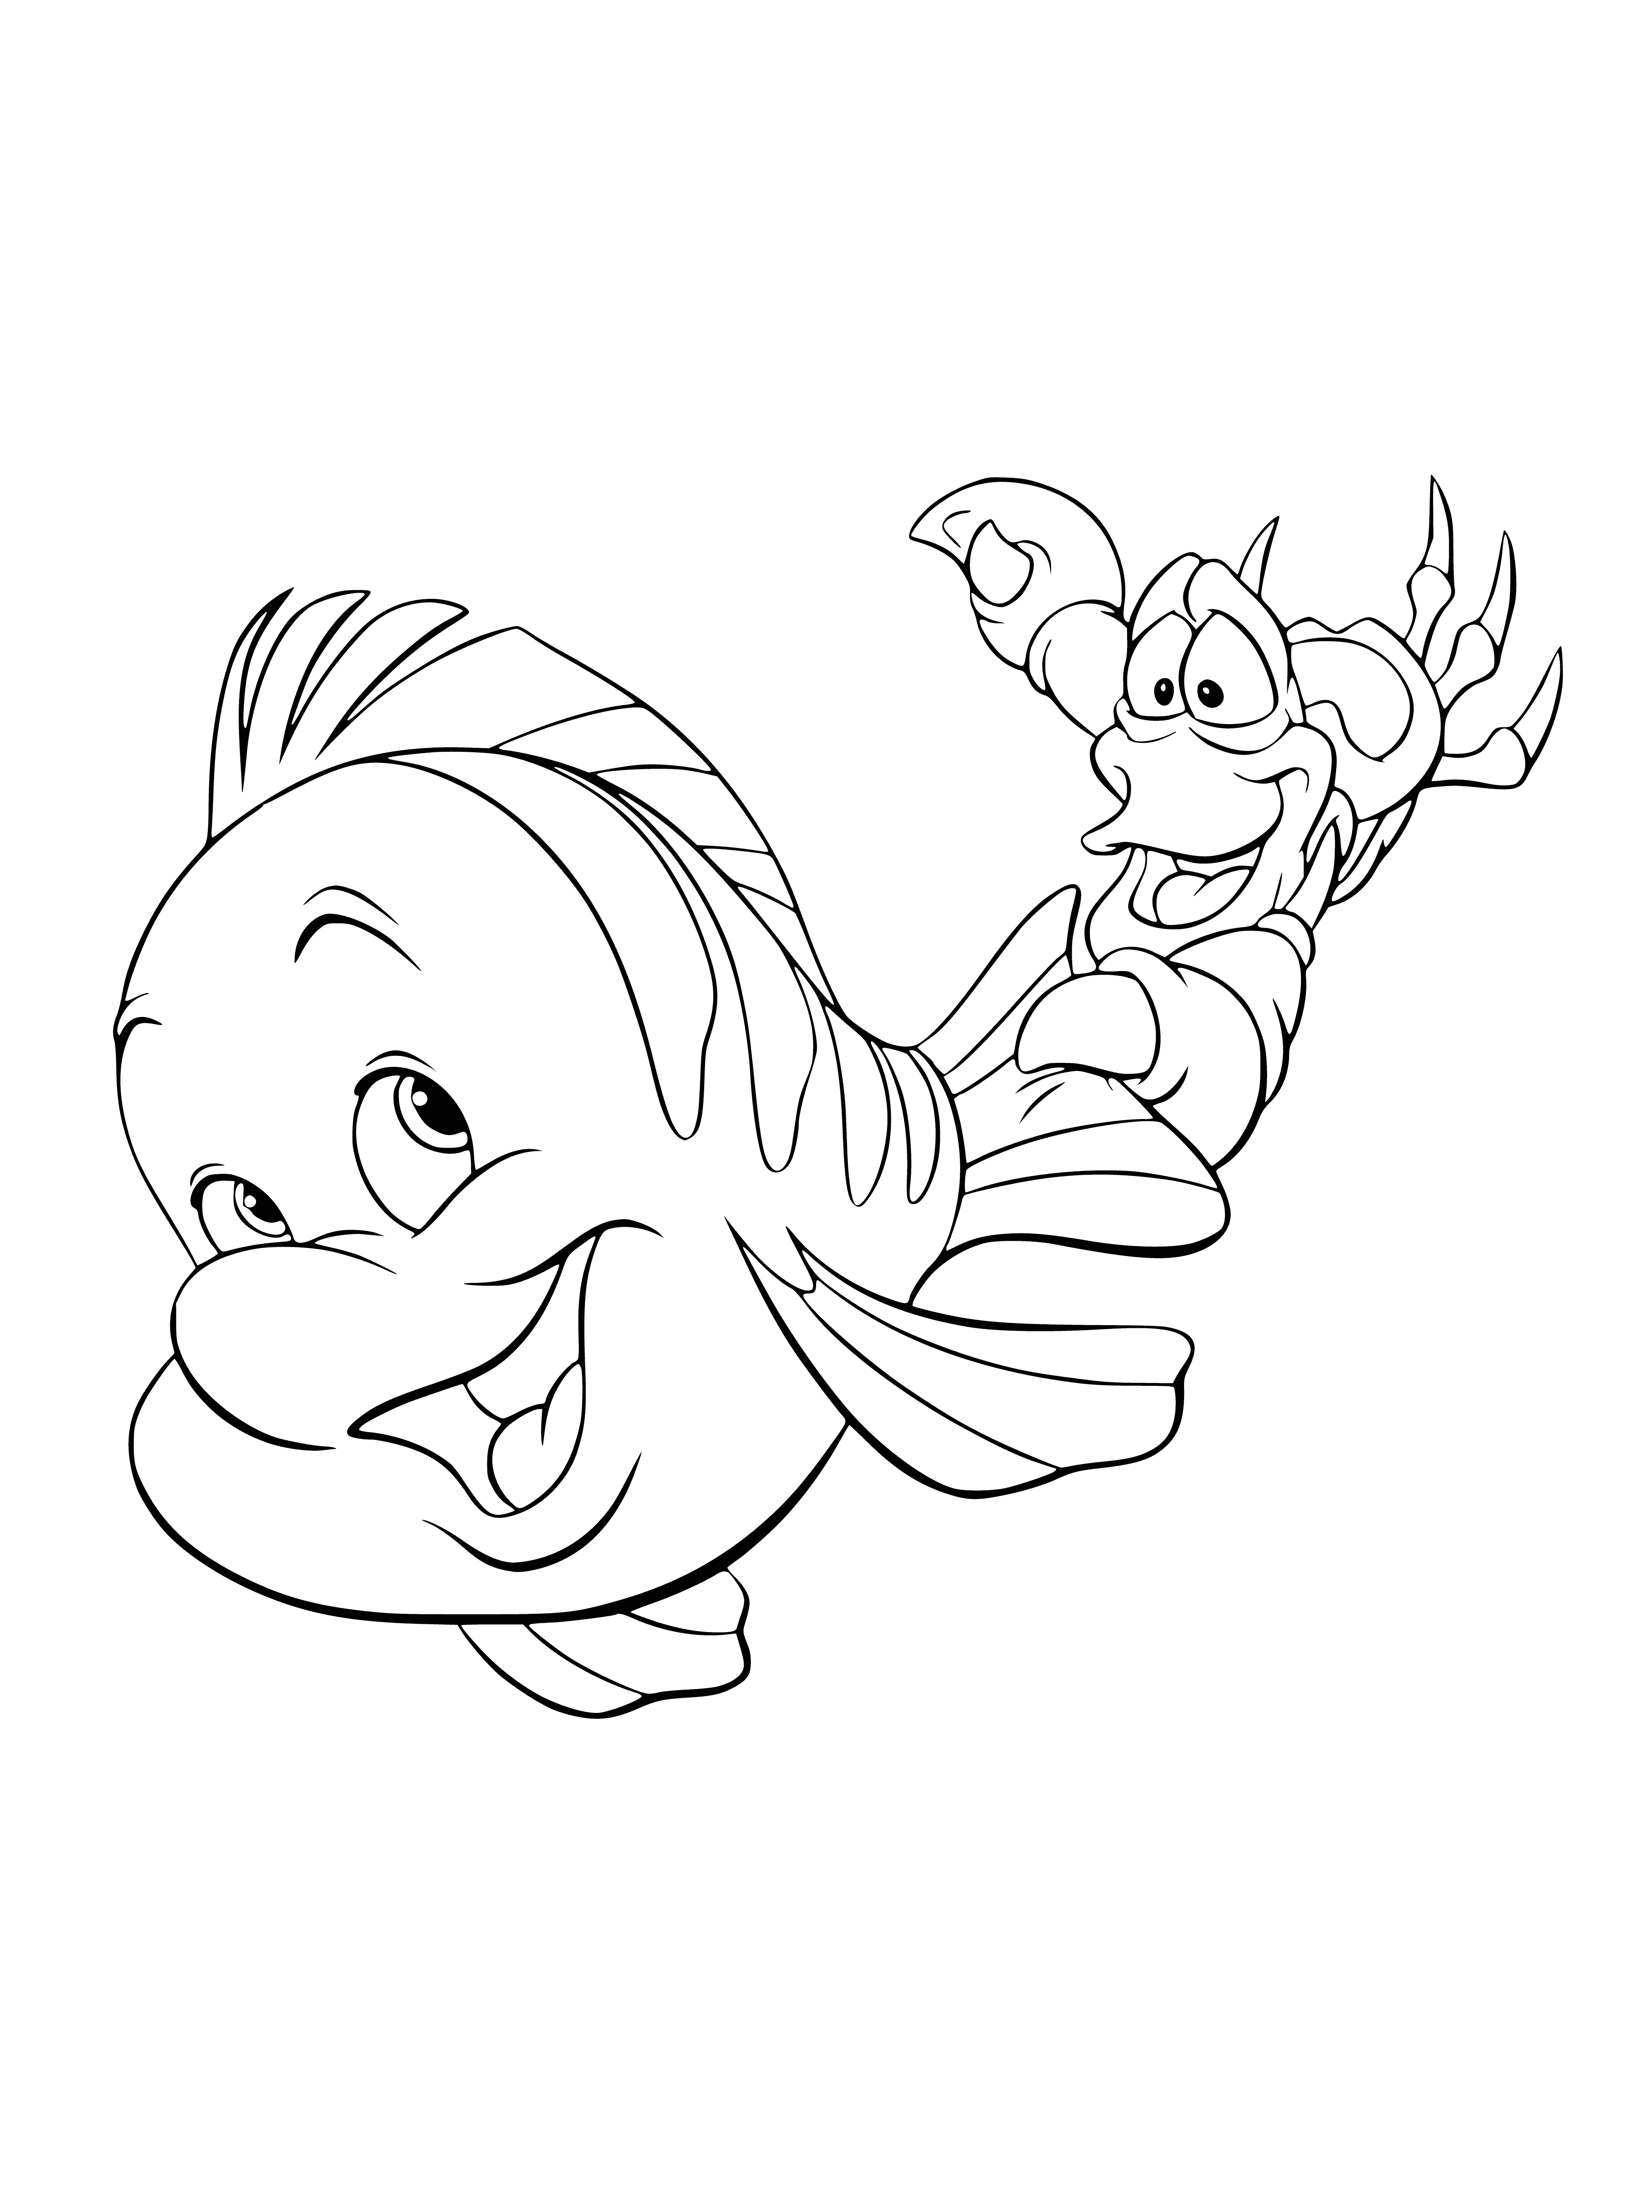 coloring page: Flounder & Sebastian swim in the ocean: Flounder a blue fish w/ yellow fins & big eyes; Sebastian a red crab w/ big claws & big smile.